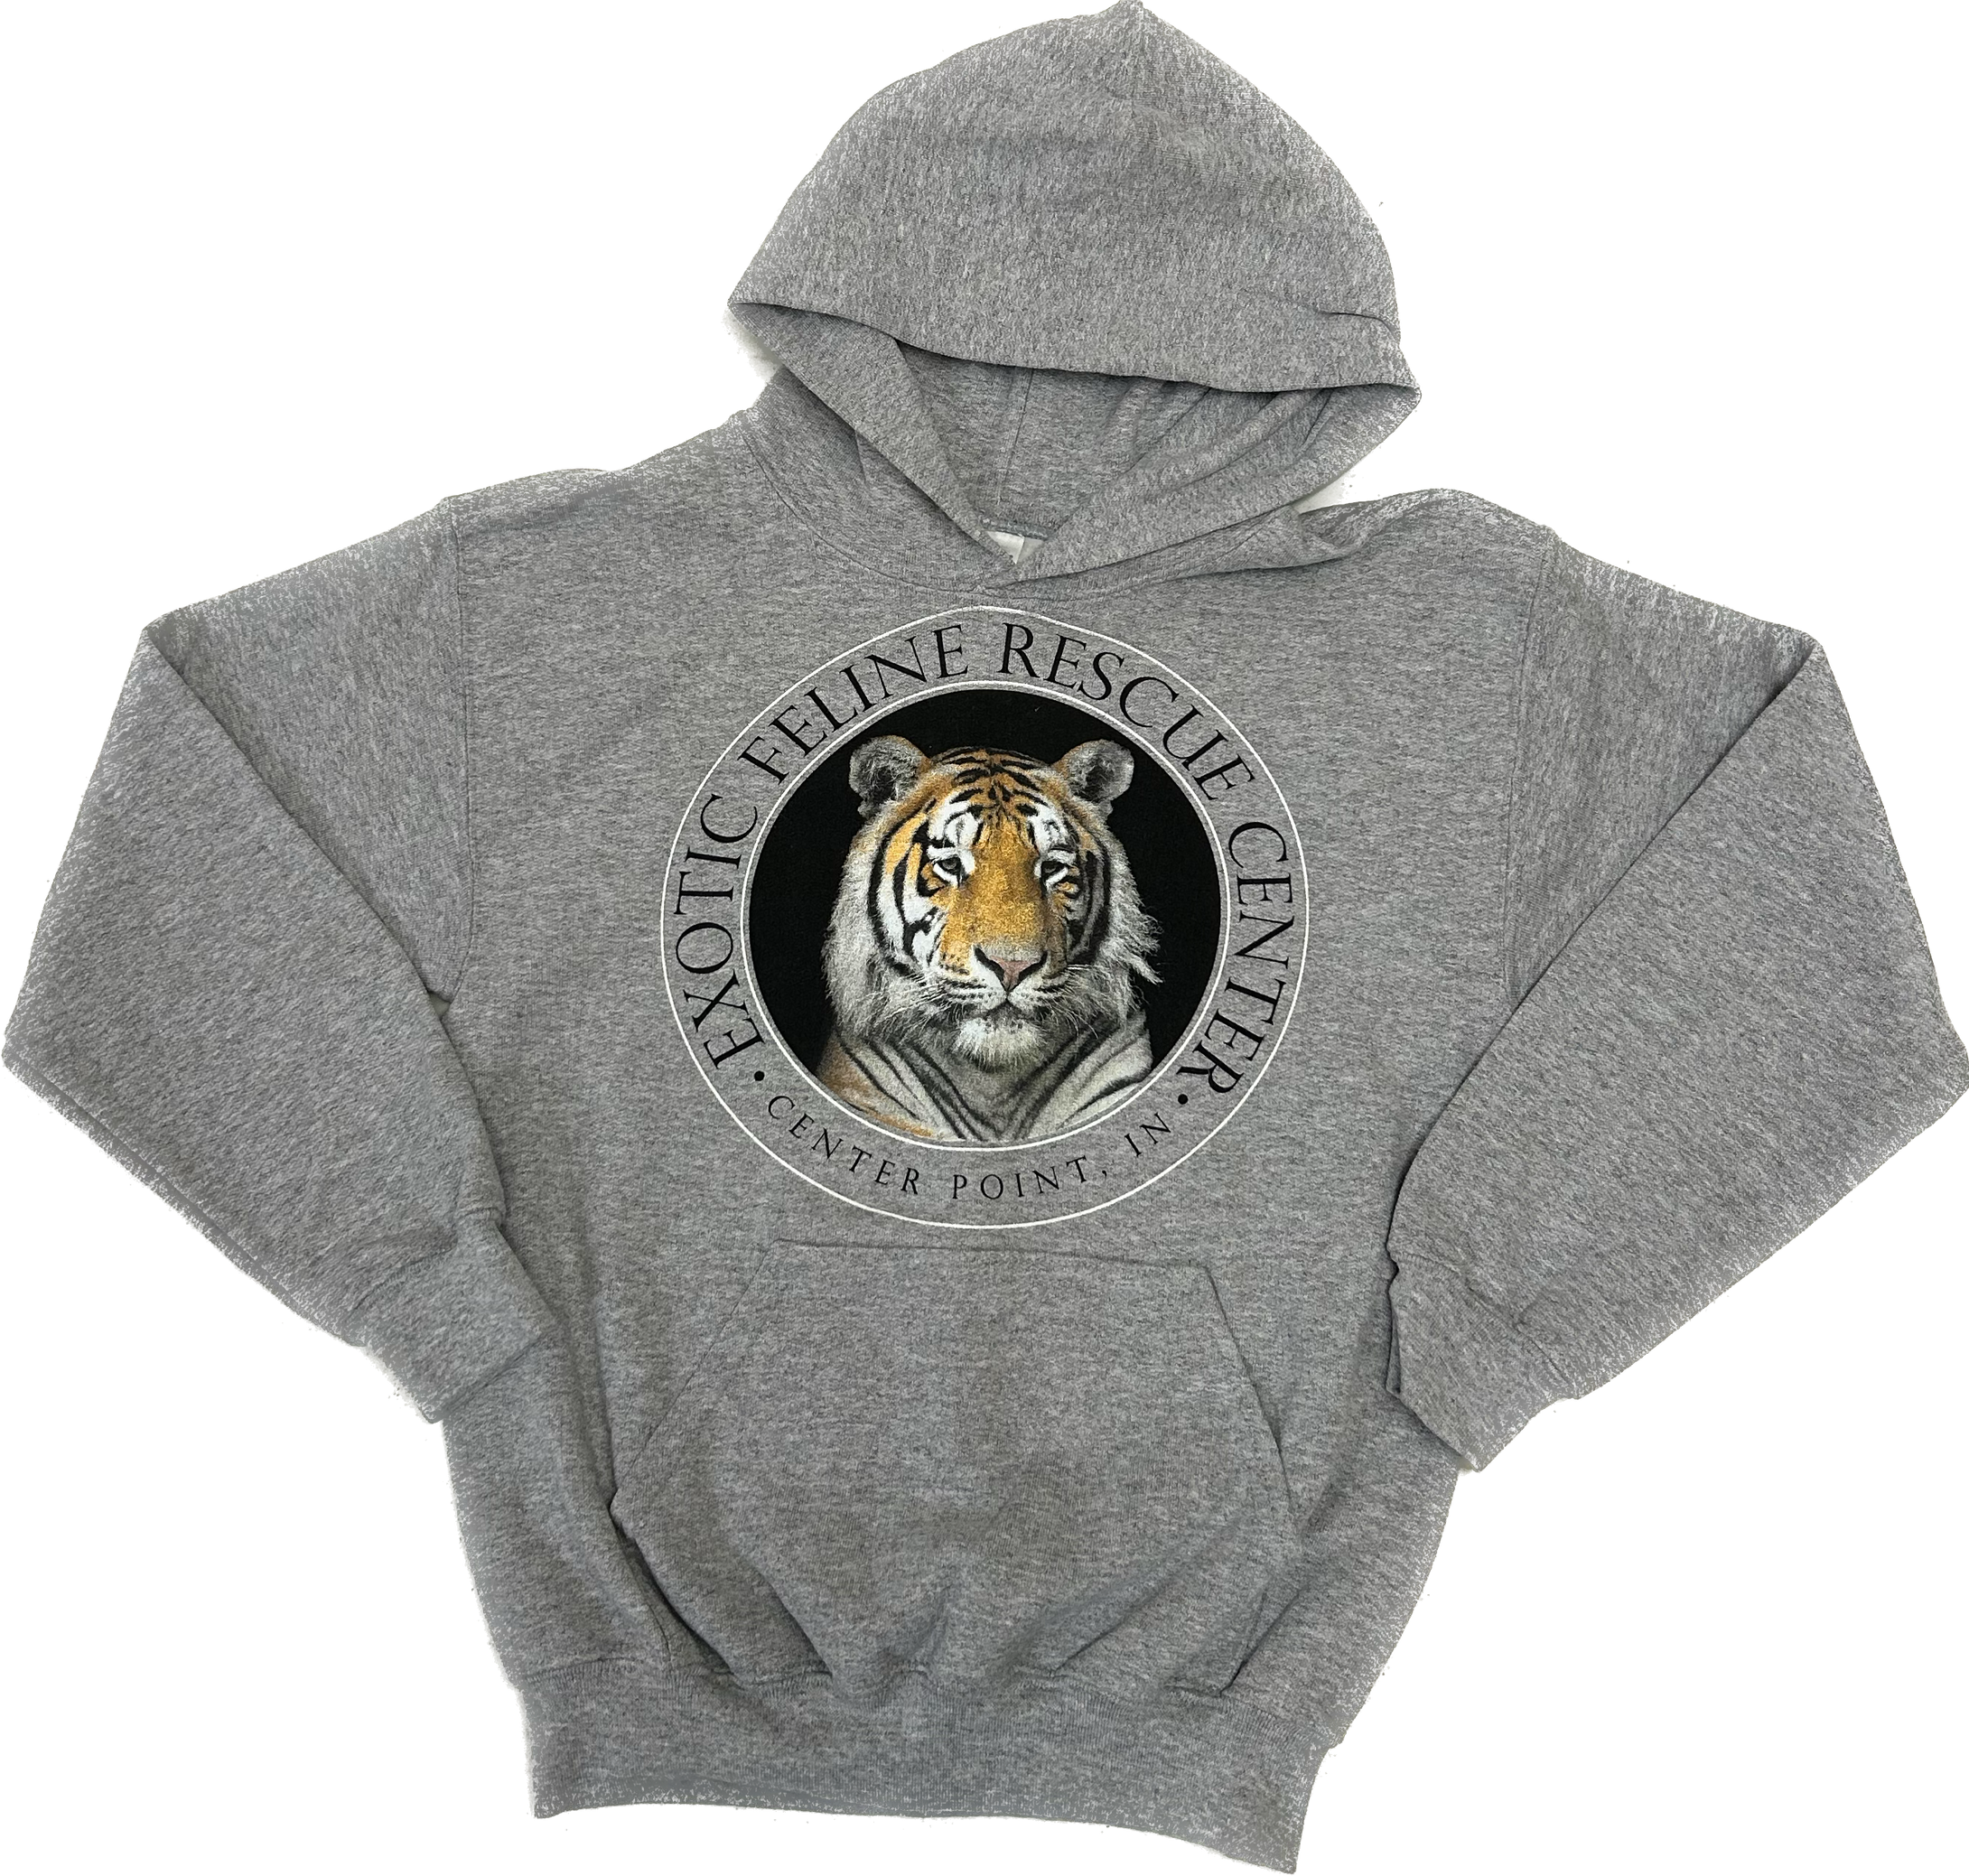 Max the Tiger on Gray Hooded Sweatshirt